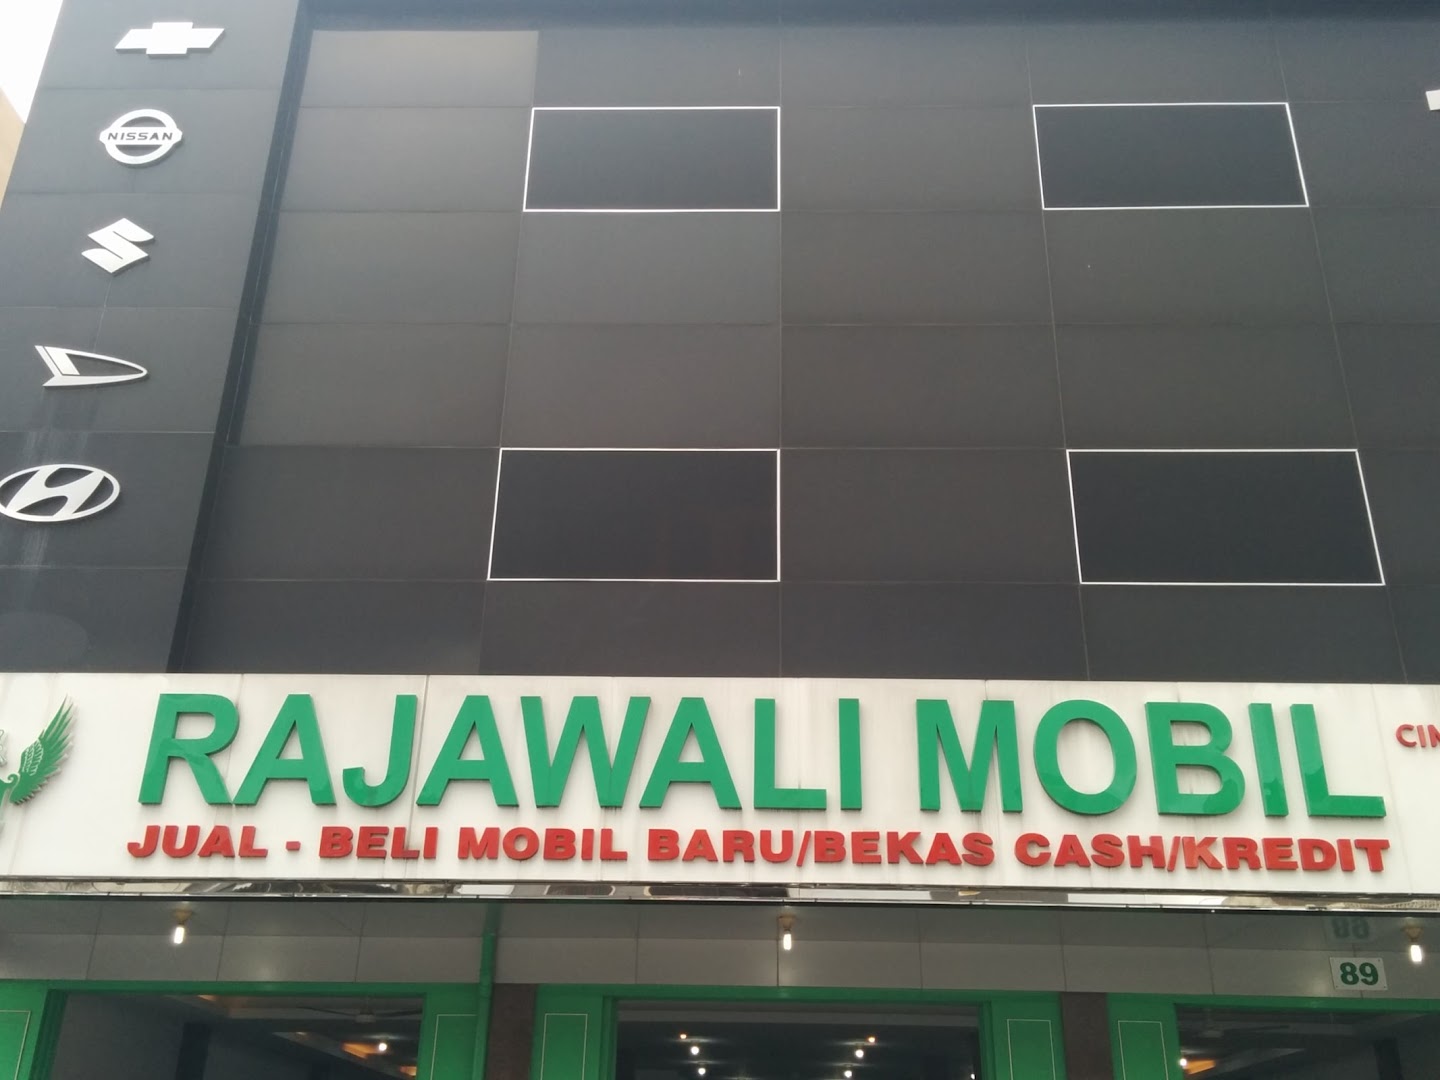 Rajawali Mobil Photo